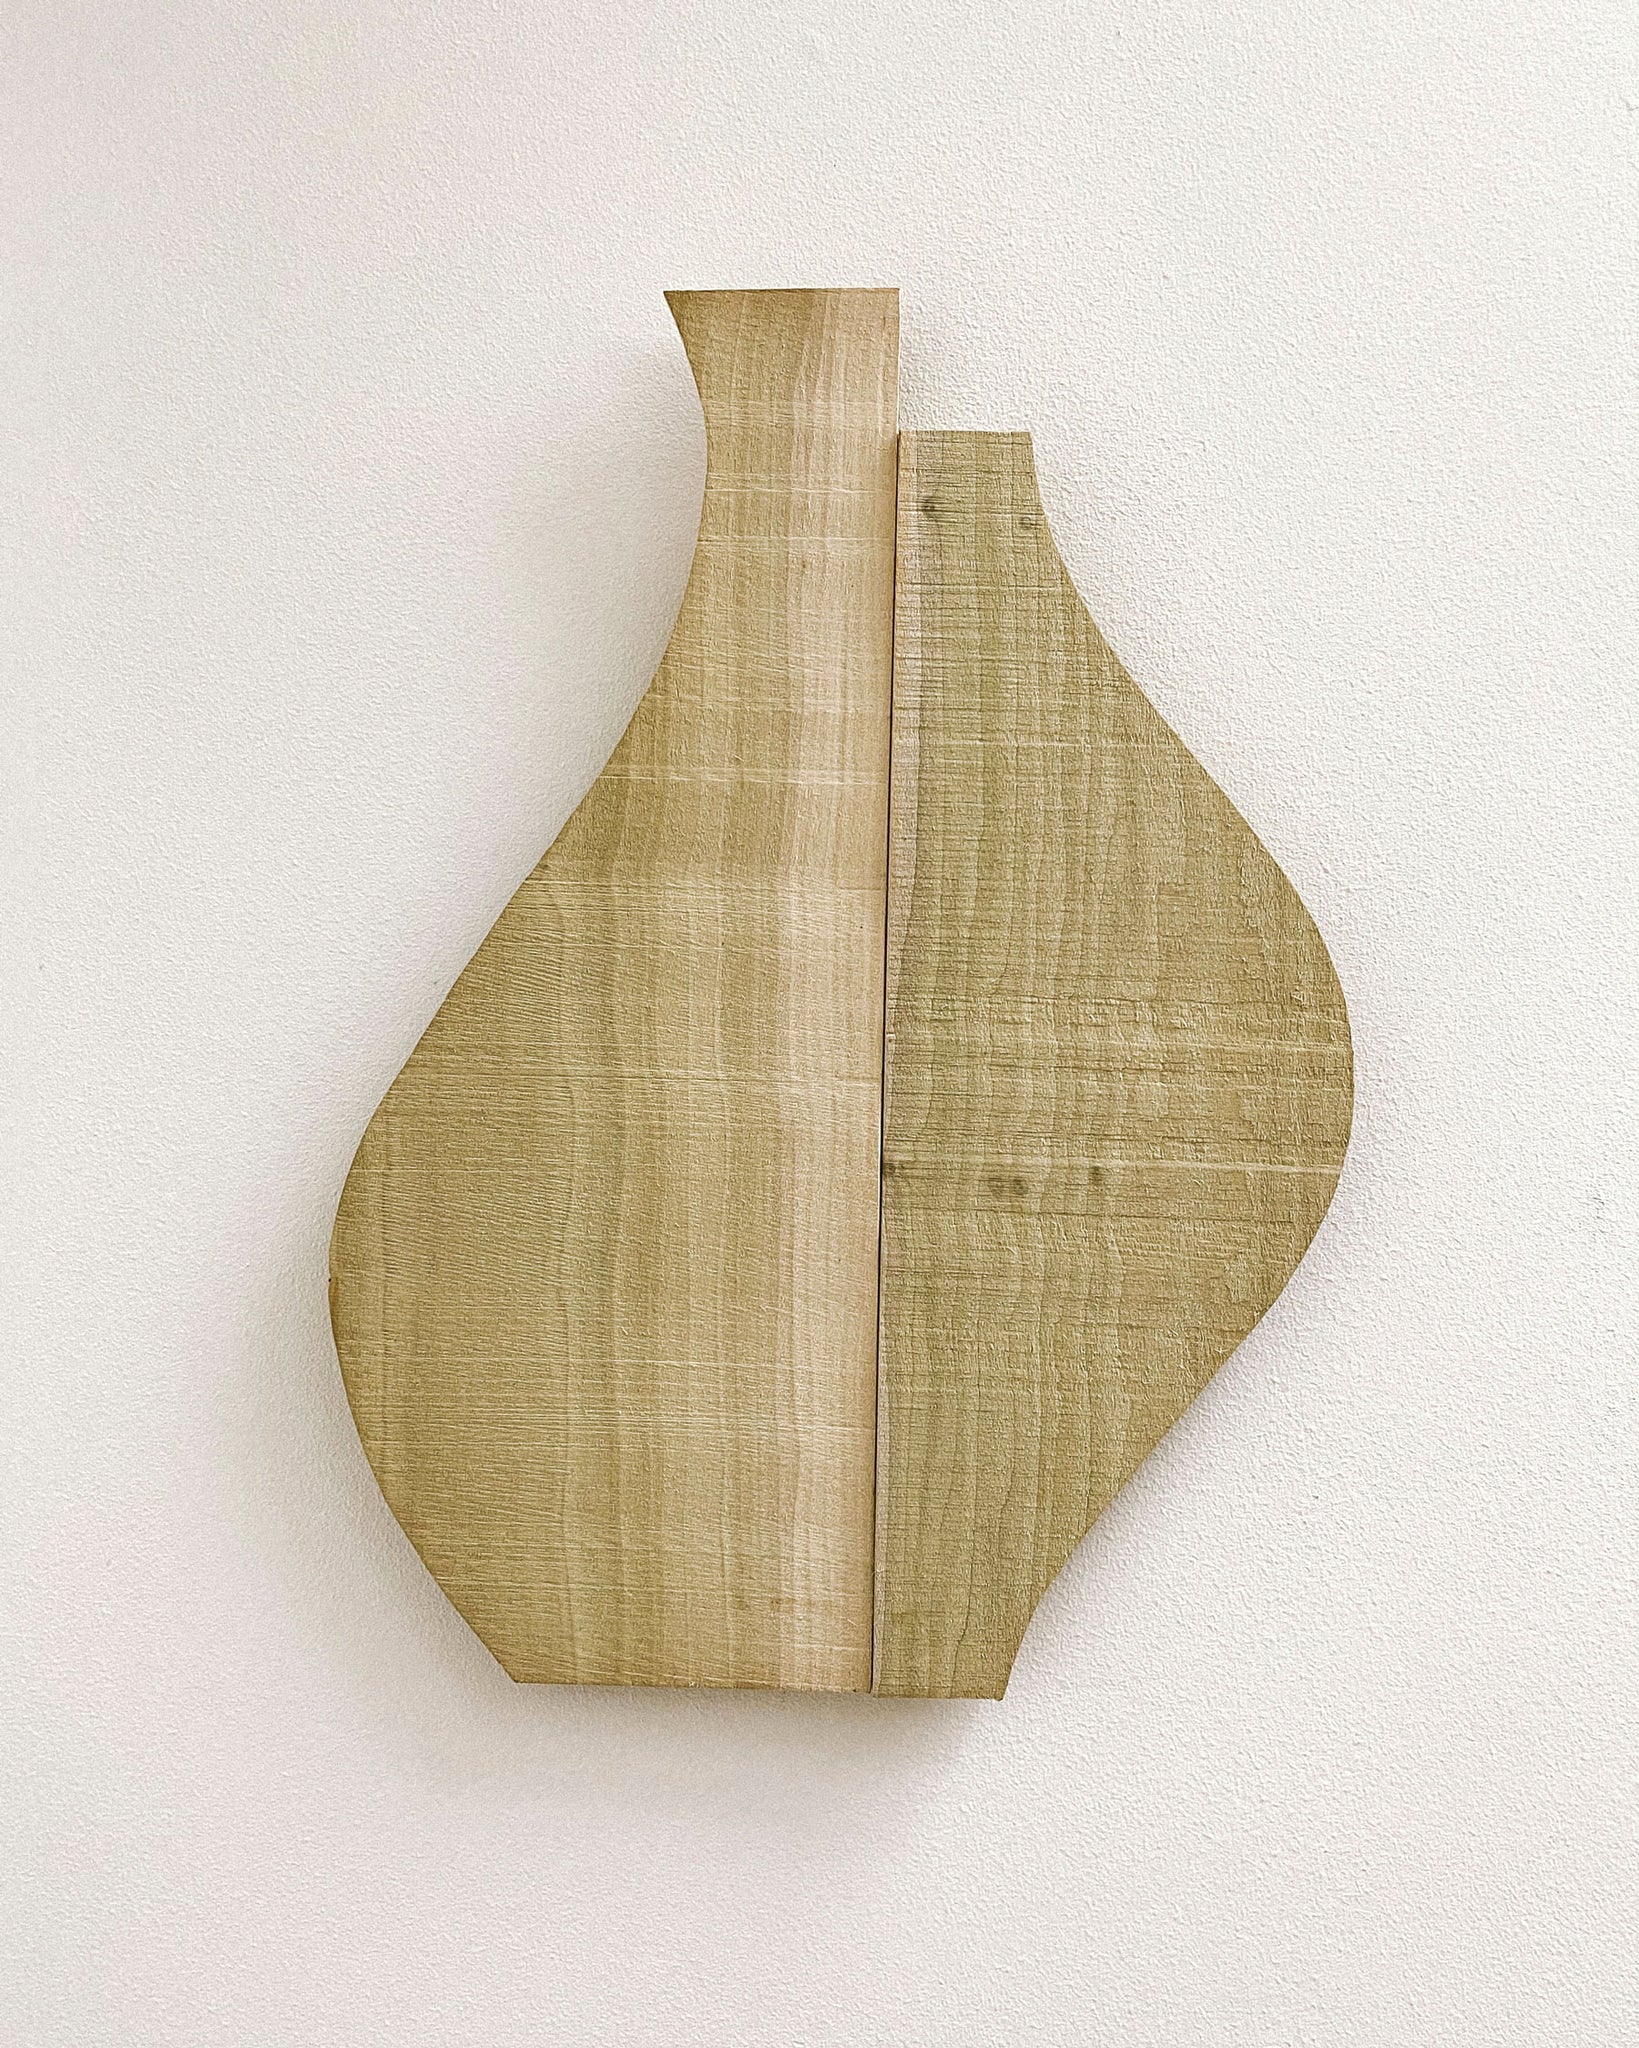 Wooden Sculpture No. 2